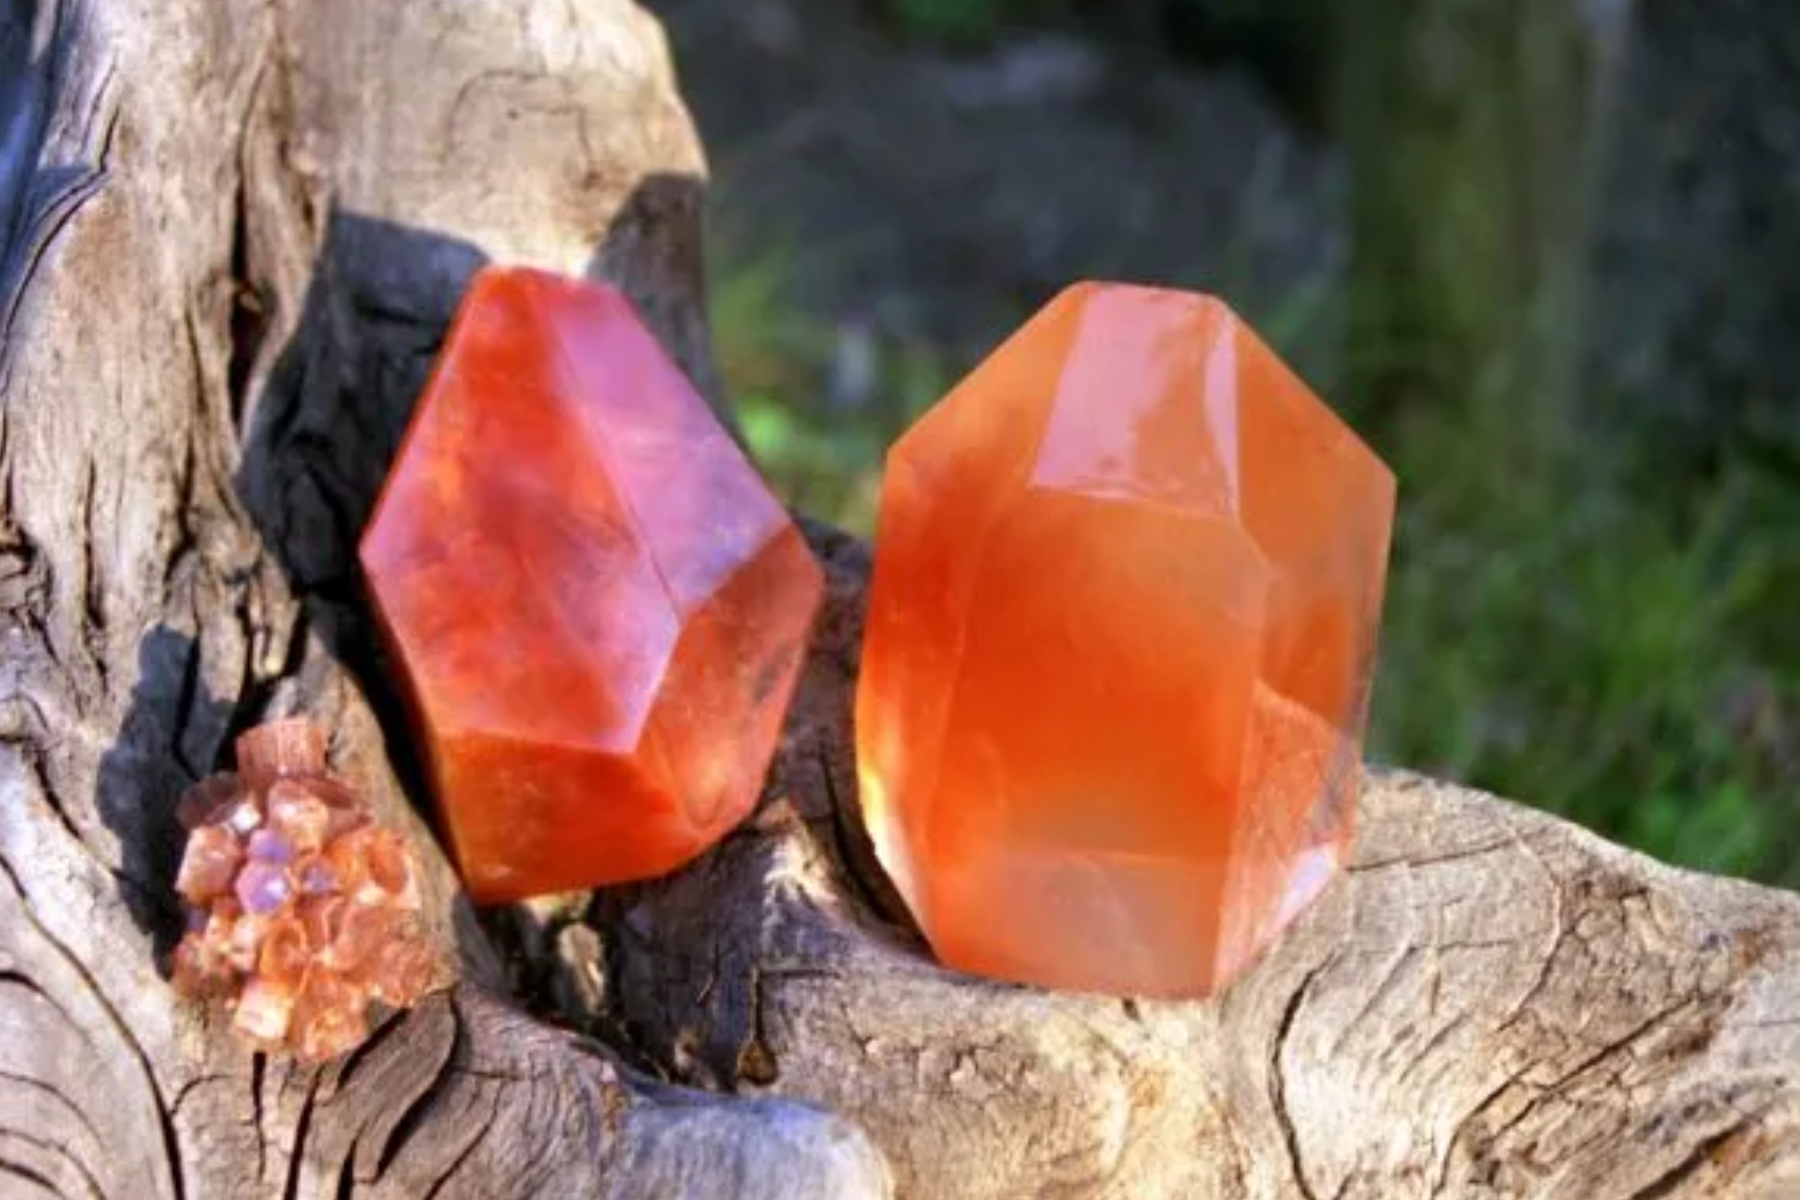 Two orange gemstones on a wood